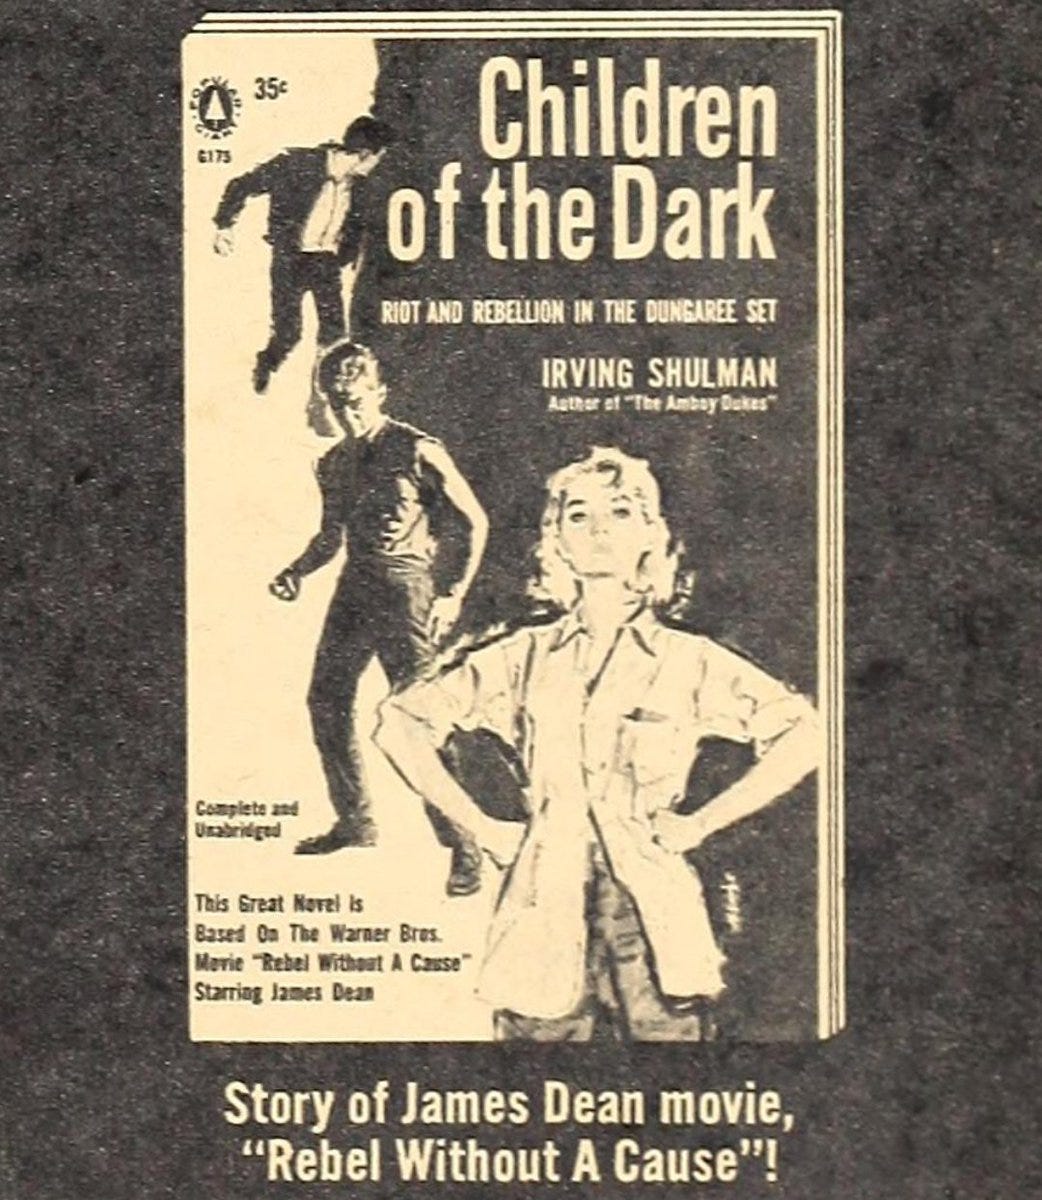 Ad for "Children of the Dark"